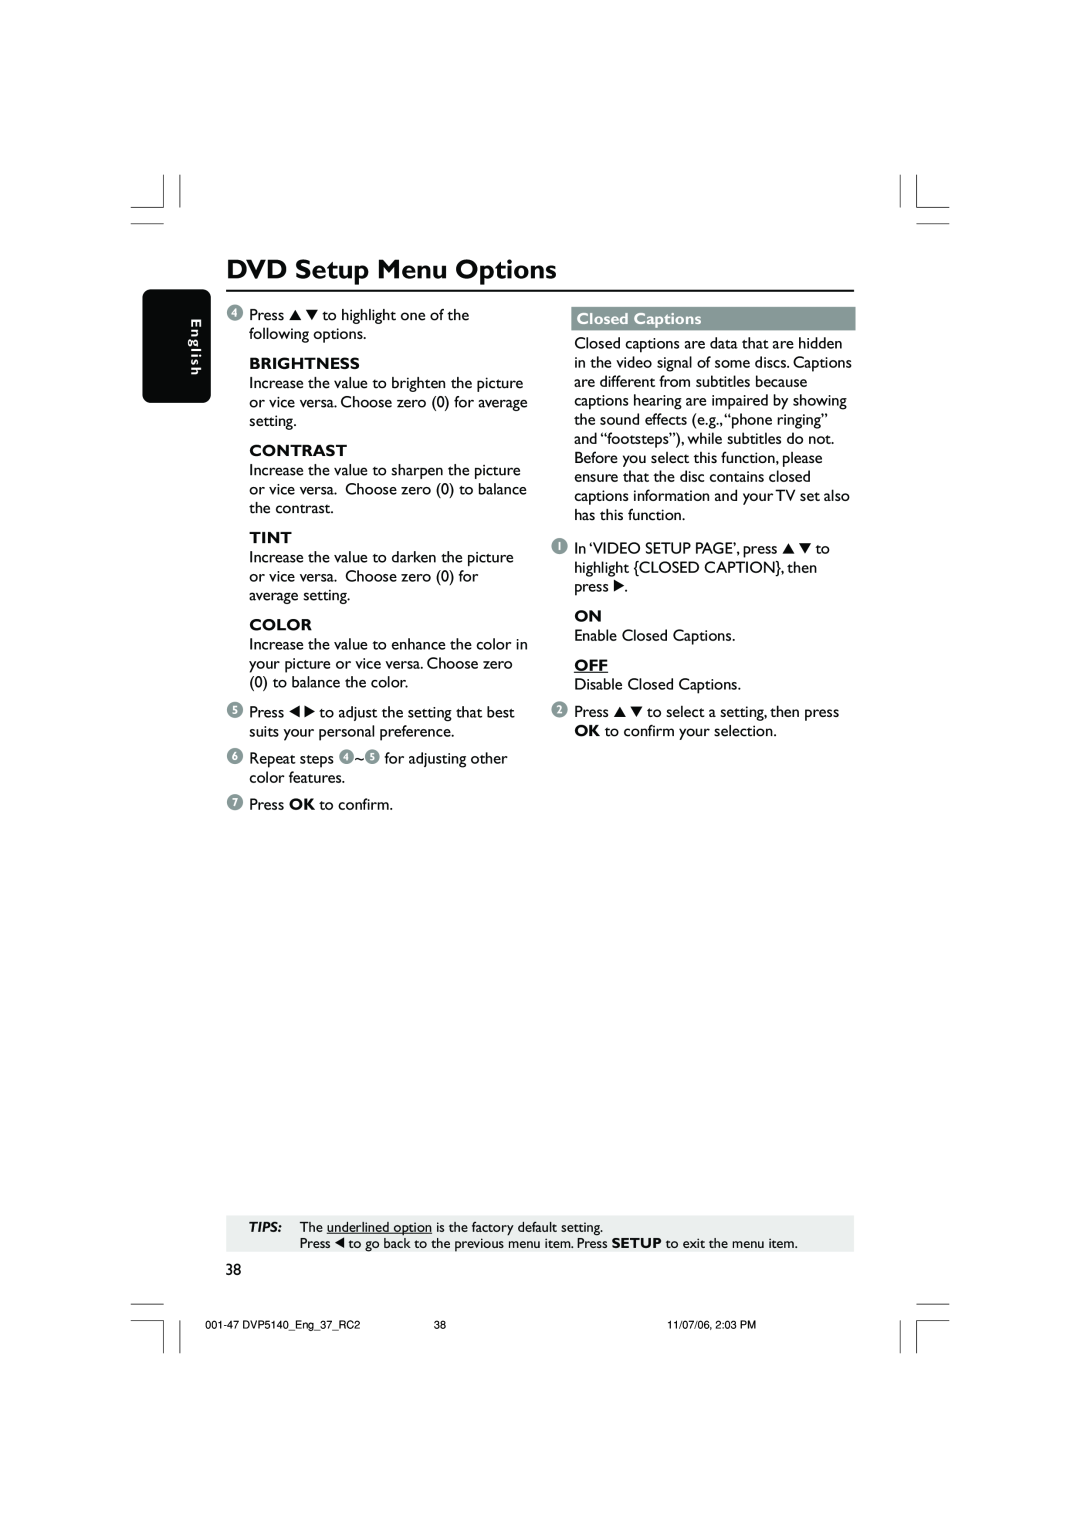 Philips DVP5140 user manual DVD Setup Menu Options, Brightness, Contrast, Tint, Color, Closed Captions 